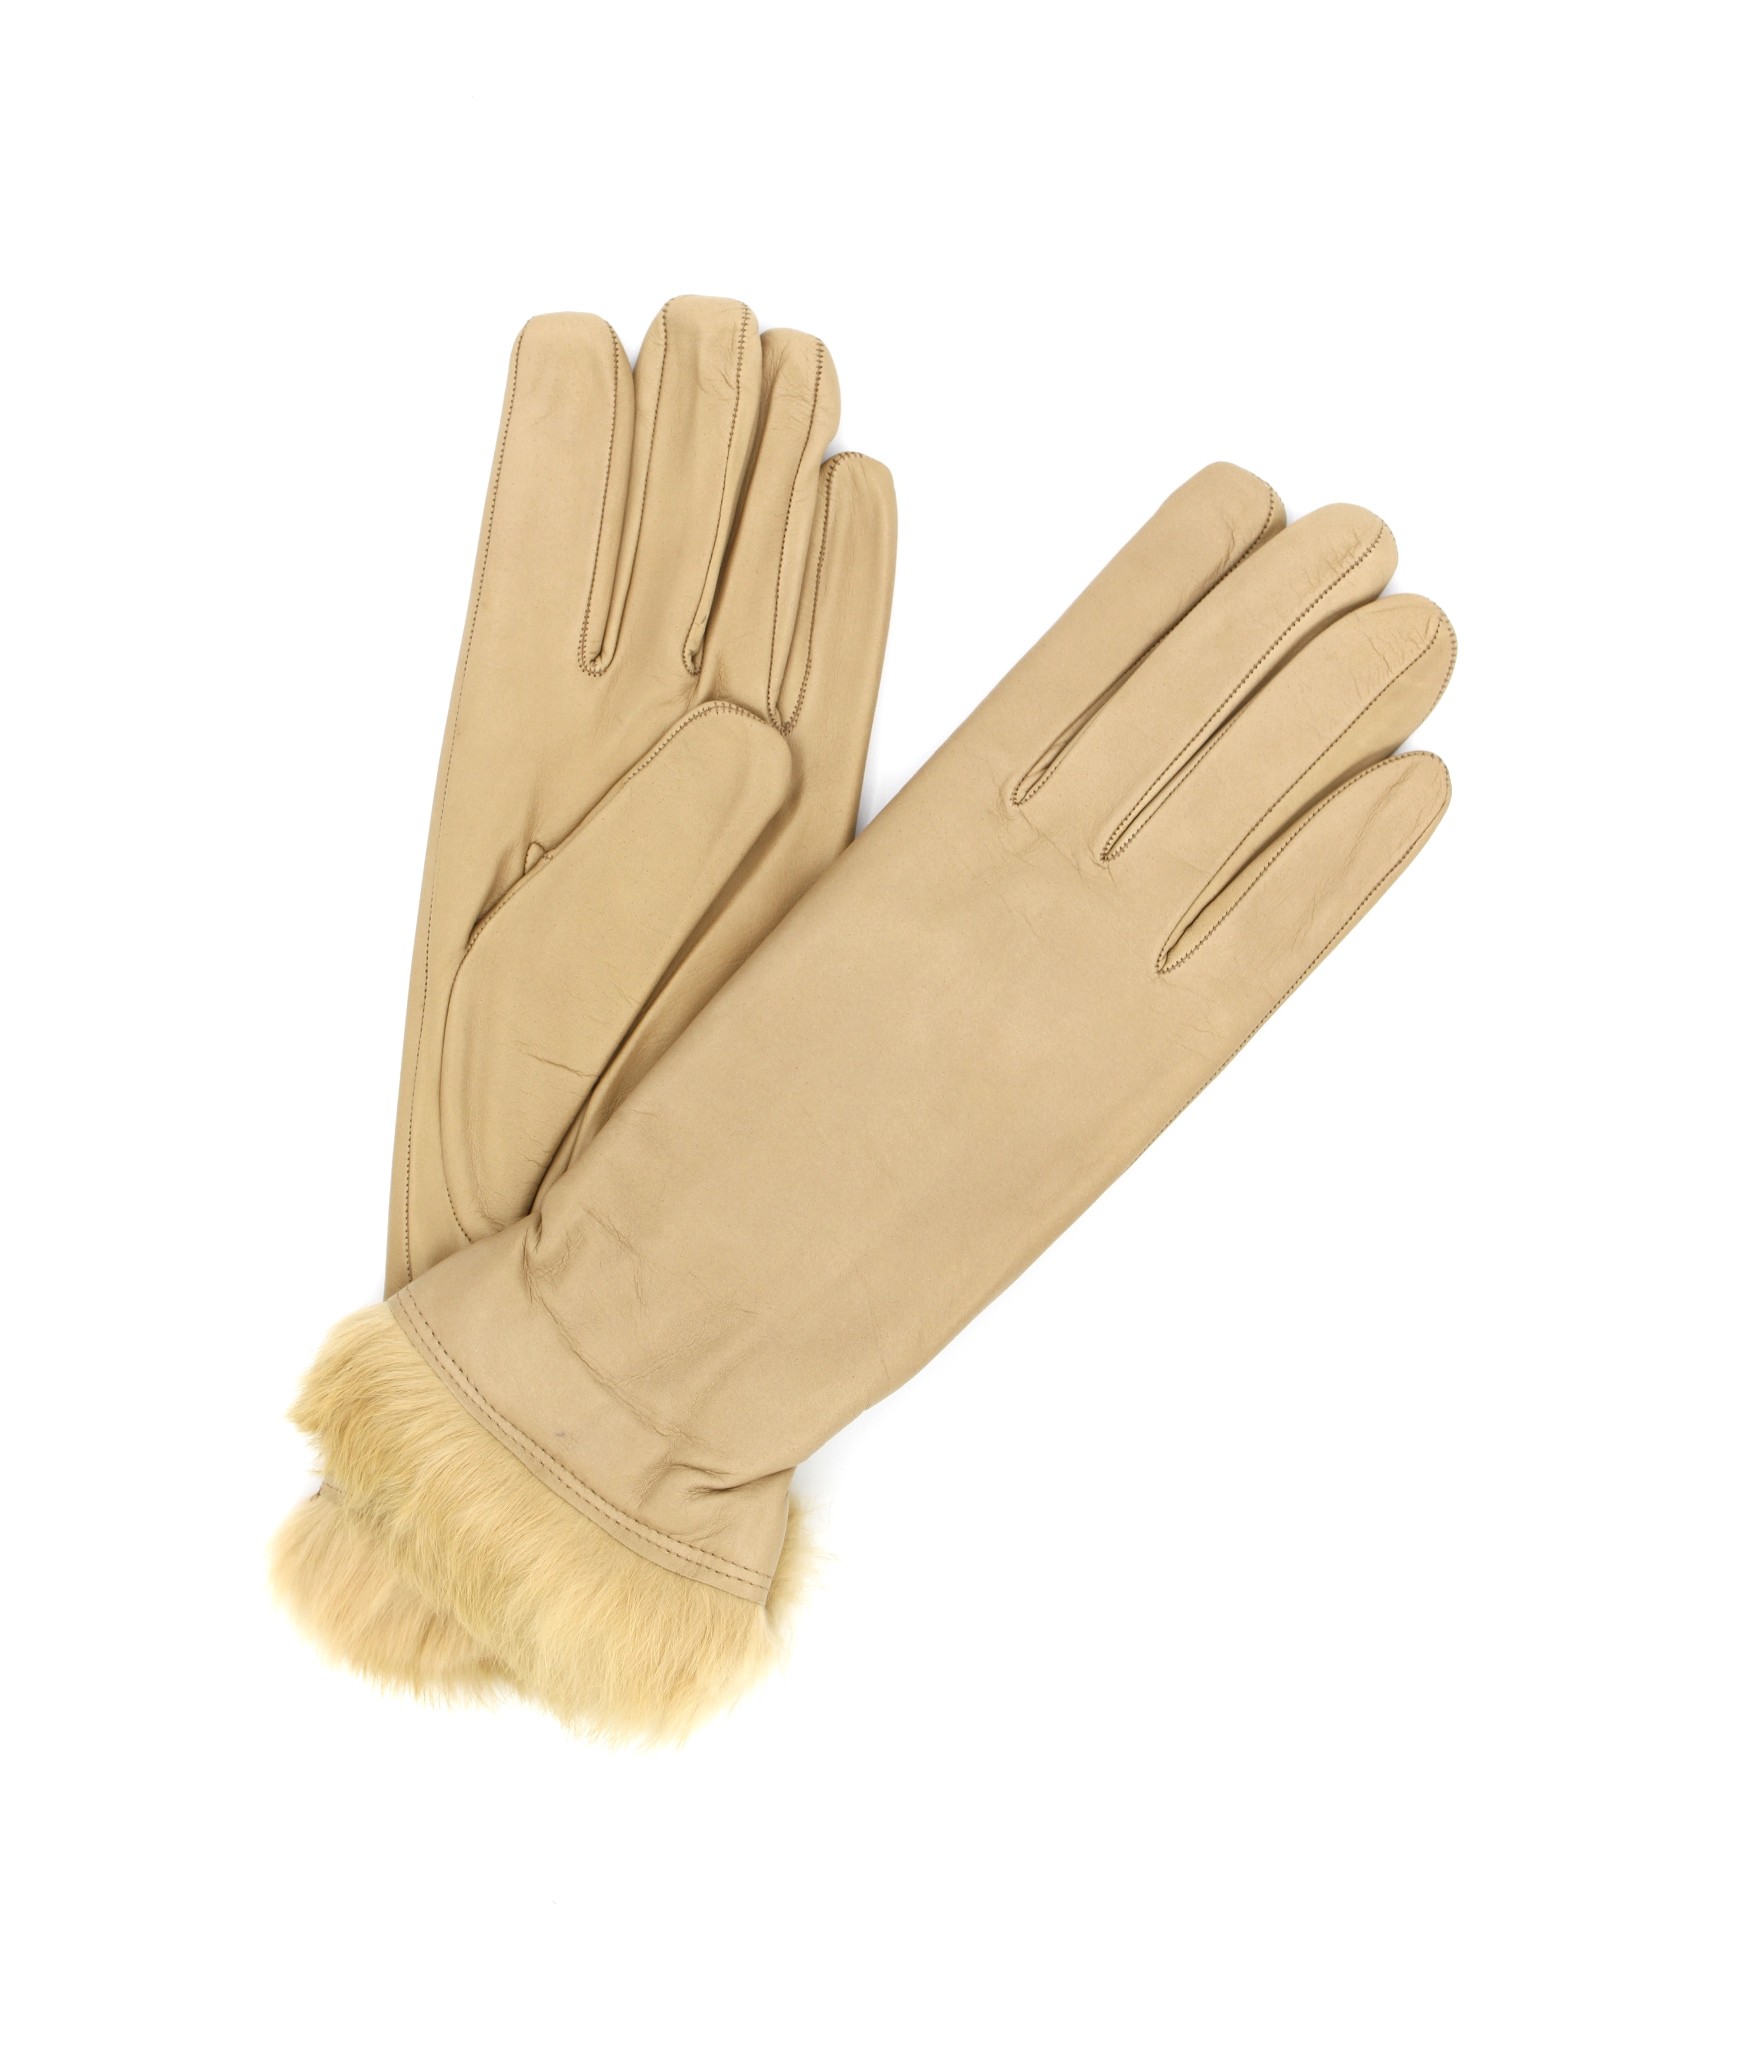 Woman Artik Nappa leather gloves 4bt Rabbir fur lined